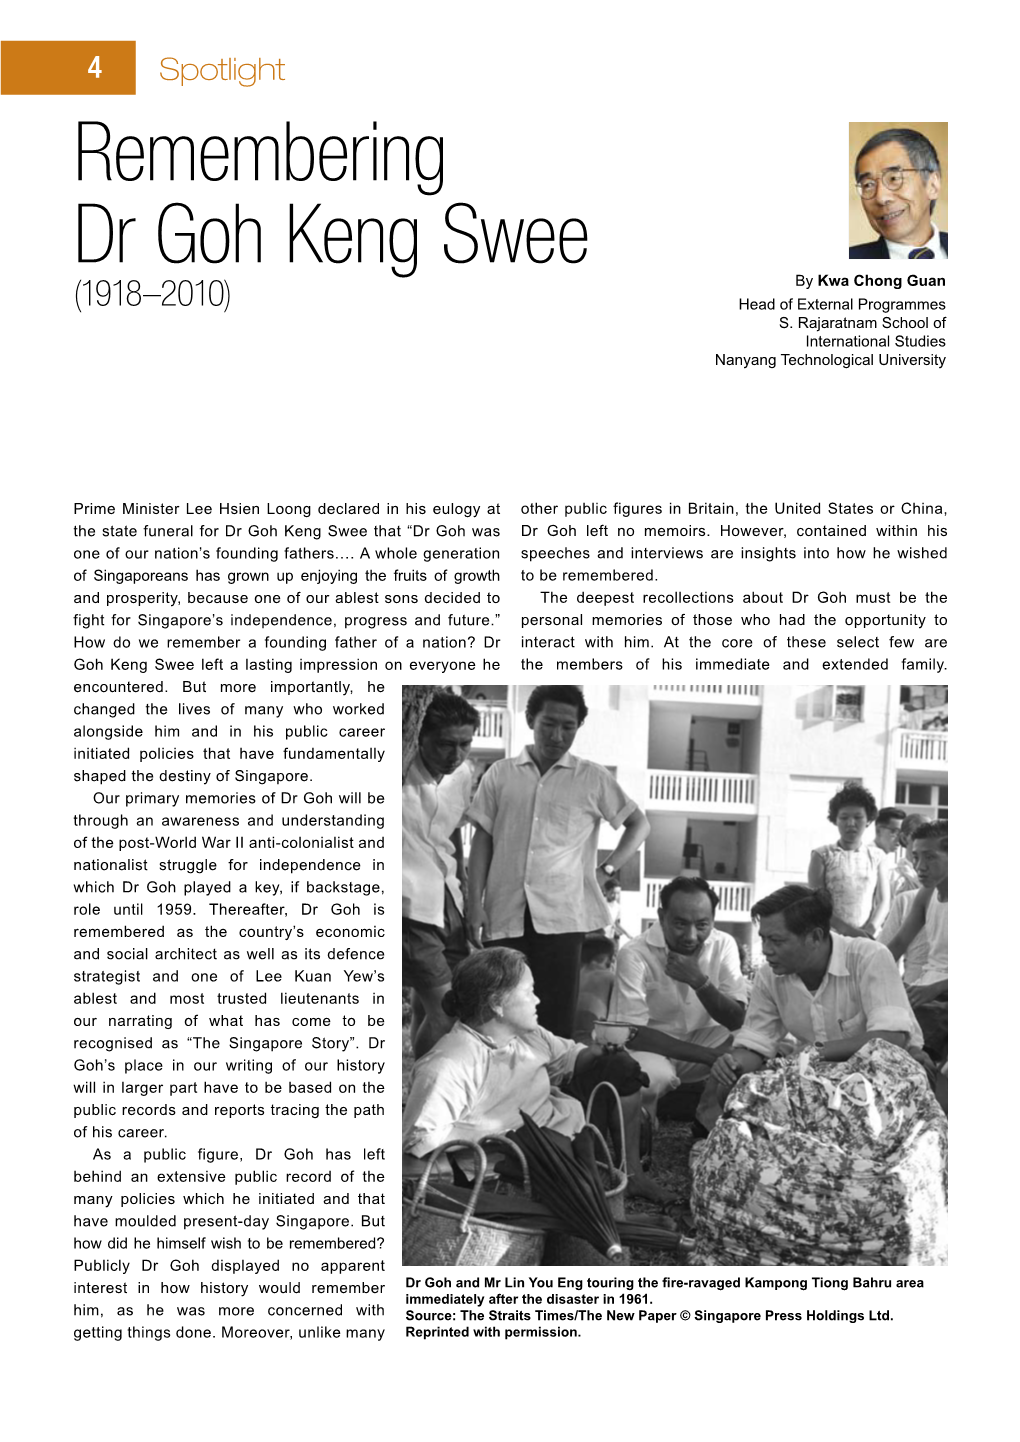 Remembering Dr Goh Keng Swee by Kwa Chong Guan (1918–2010) Head of External Programmes S